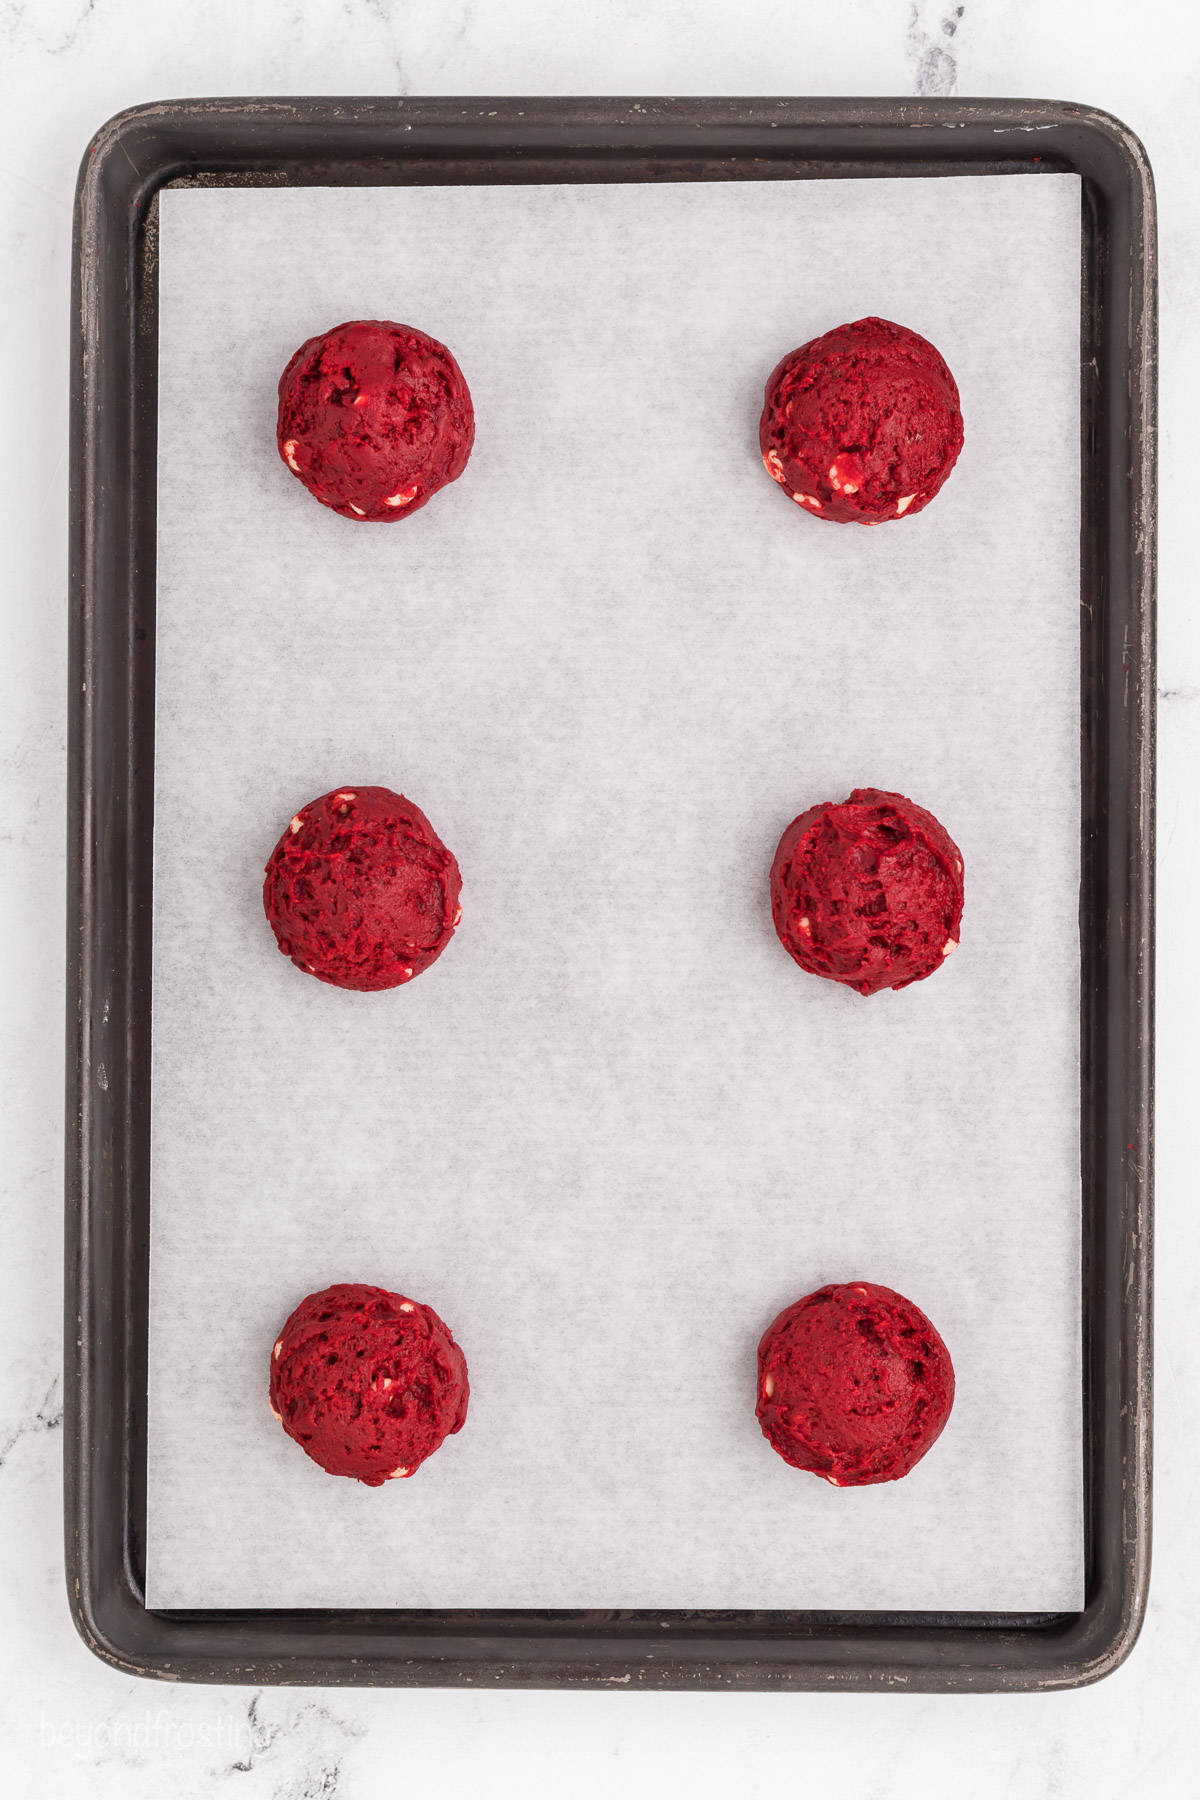 Six red velvet cookie dough balls arranged on a parchment-lined baking sheet.